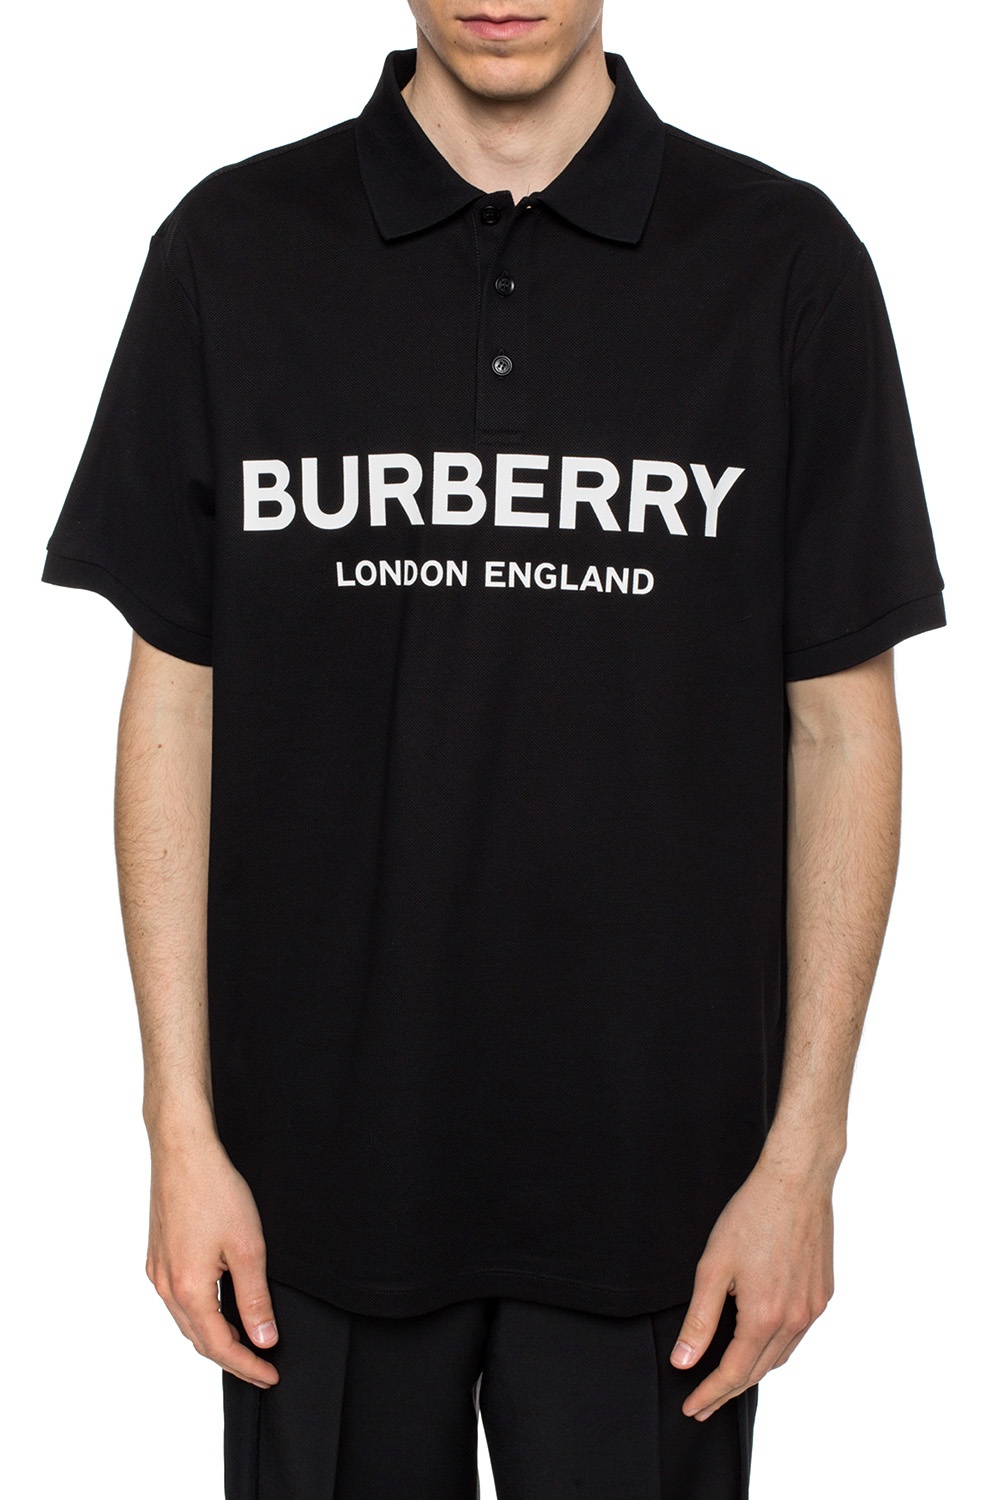 Burberry London England Mix Plaid And Black Polo Shirt - Tagotee